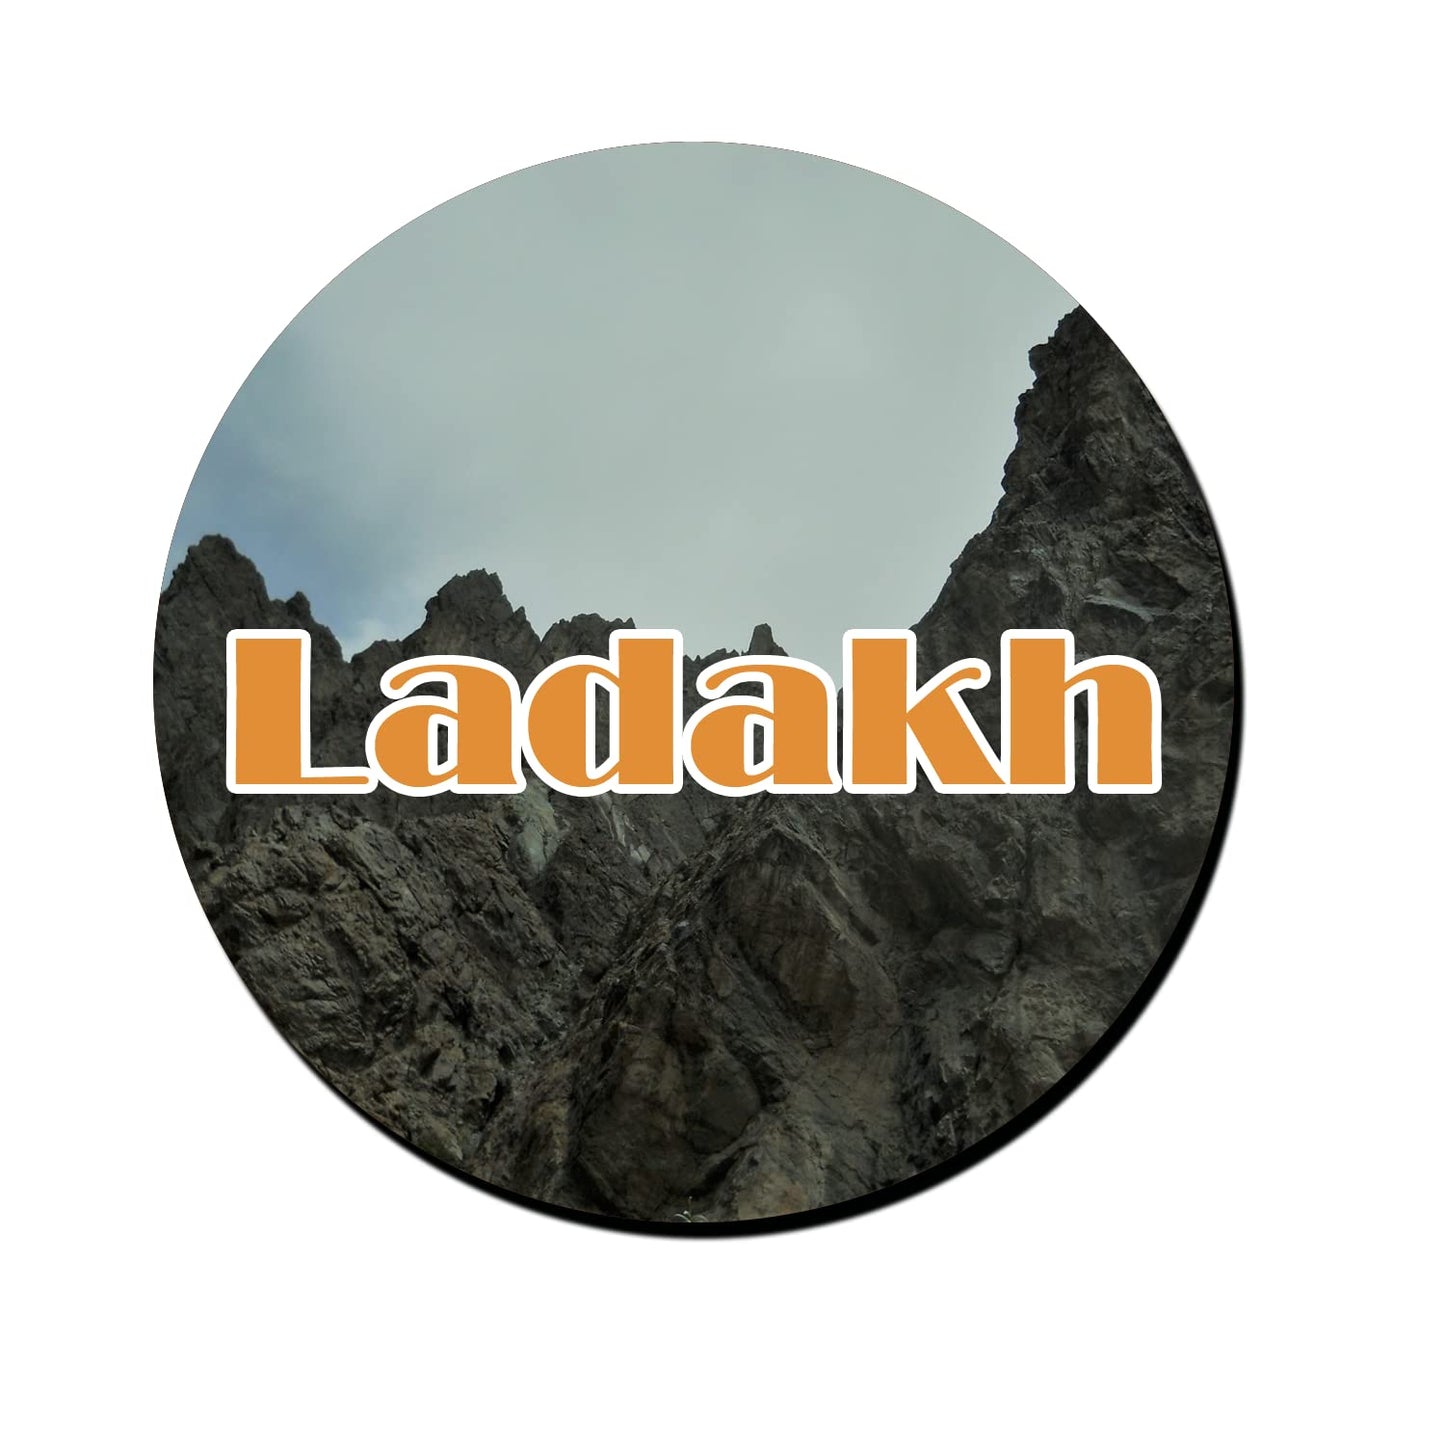 ShopTwiz Ladakh Tourism Decorative Large Fridge Magnet